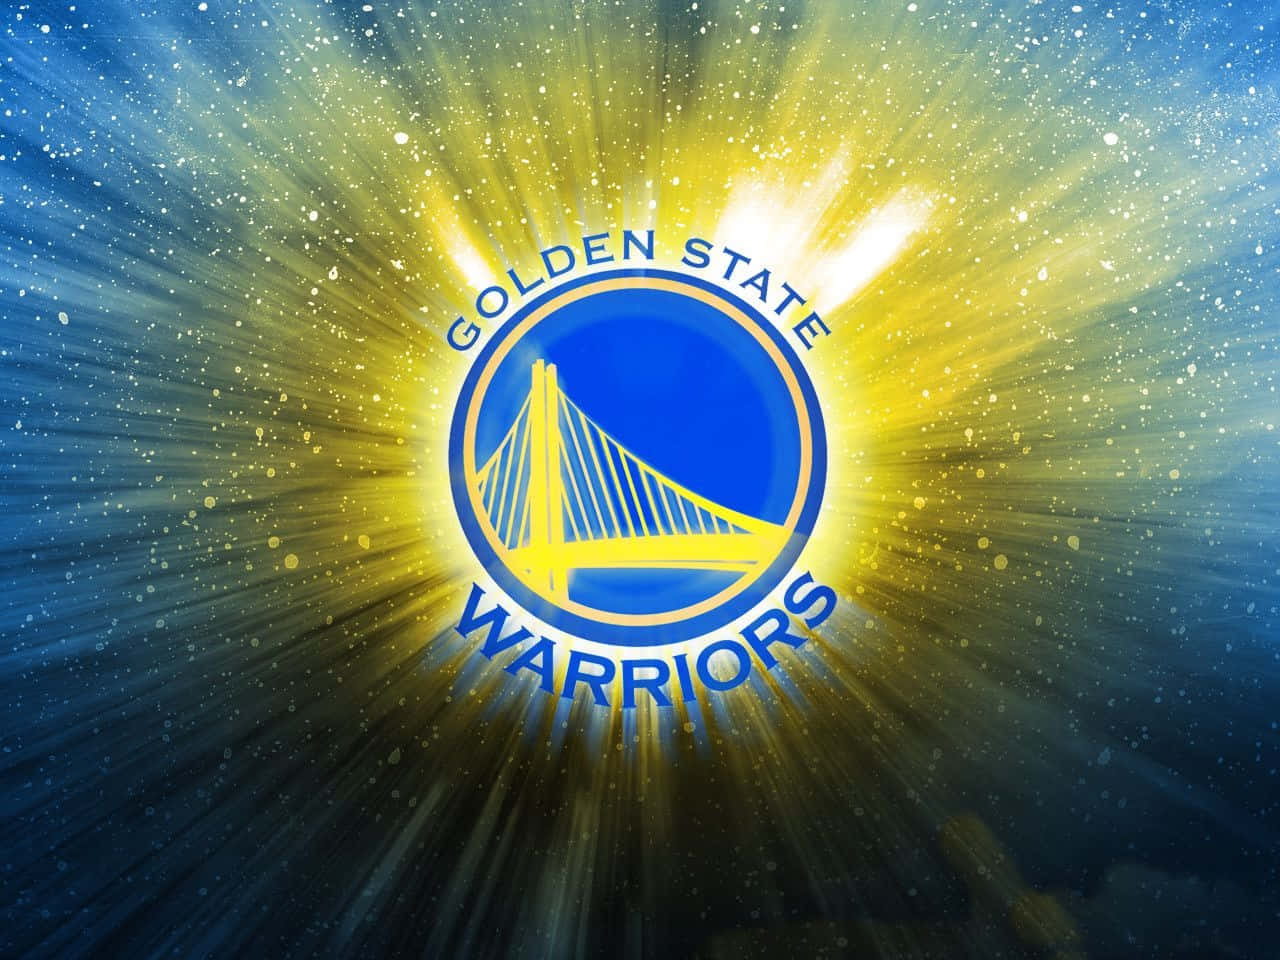 Glowing Rays Golden State Warriors Logo Wallpaper